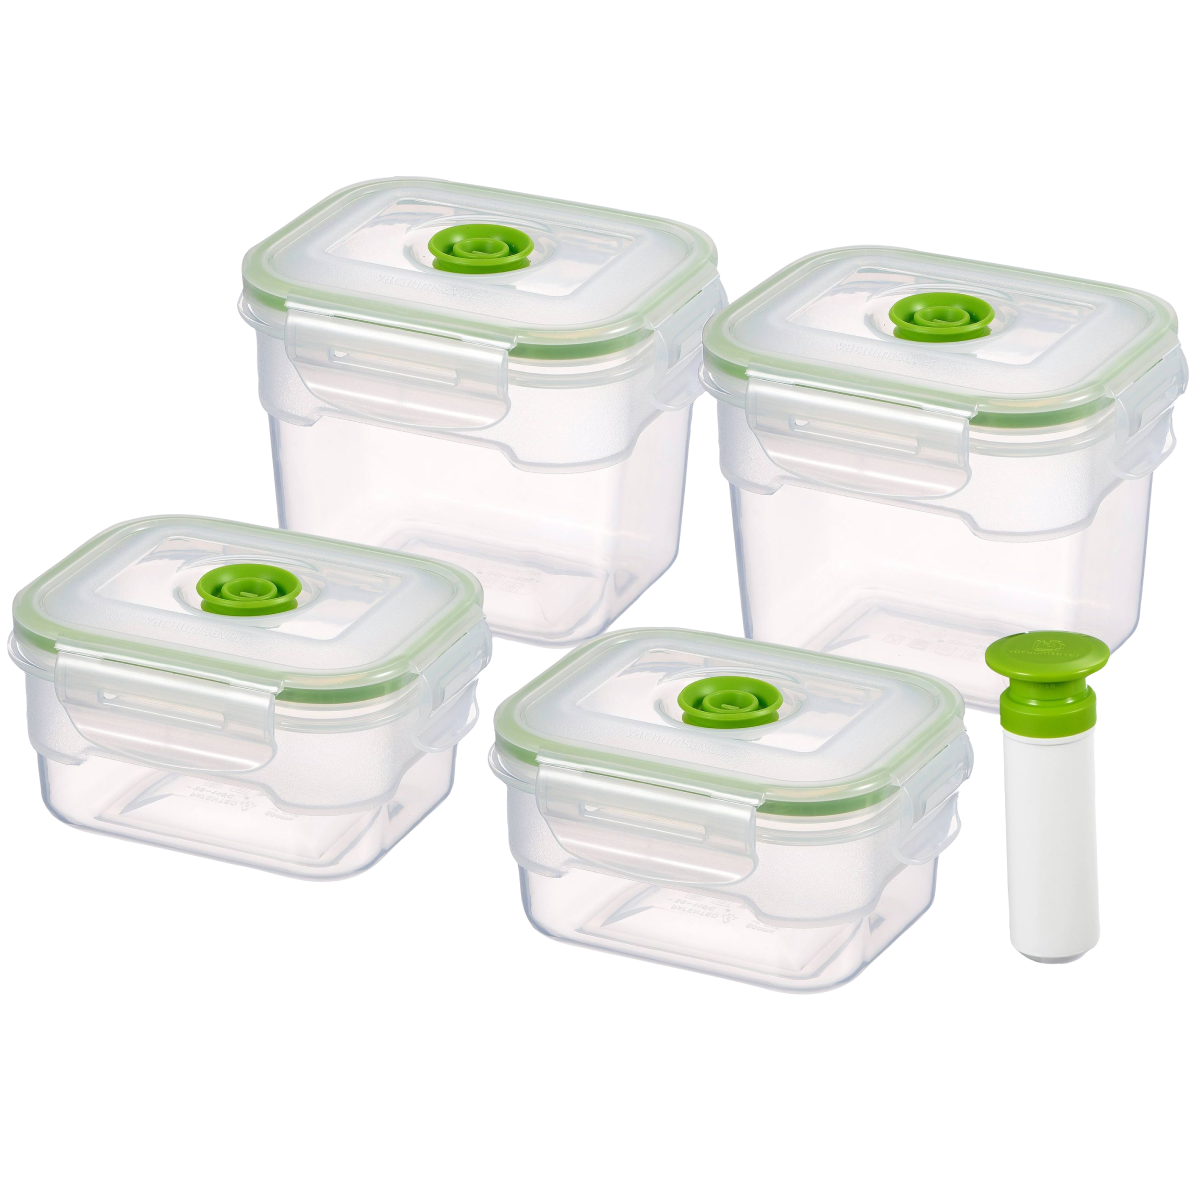 Lasting Freshness 11pc Round Vacuum Seal Food Storage Container Set